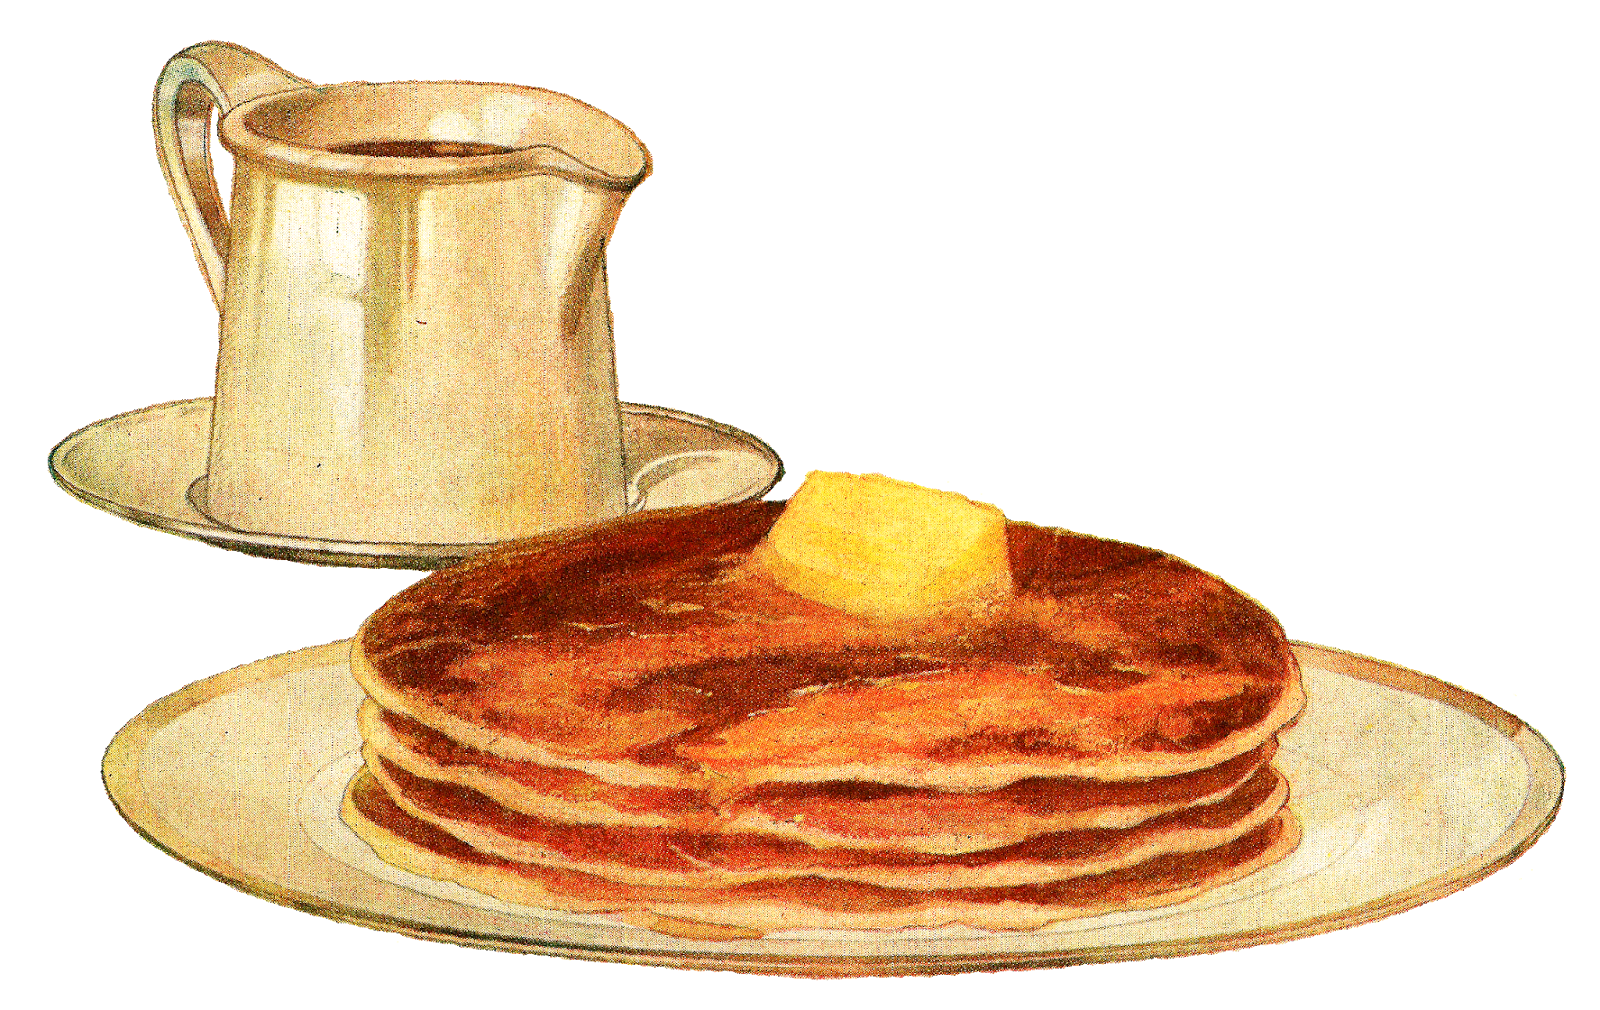 Antique images digital food. Pancake clipart baking